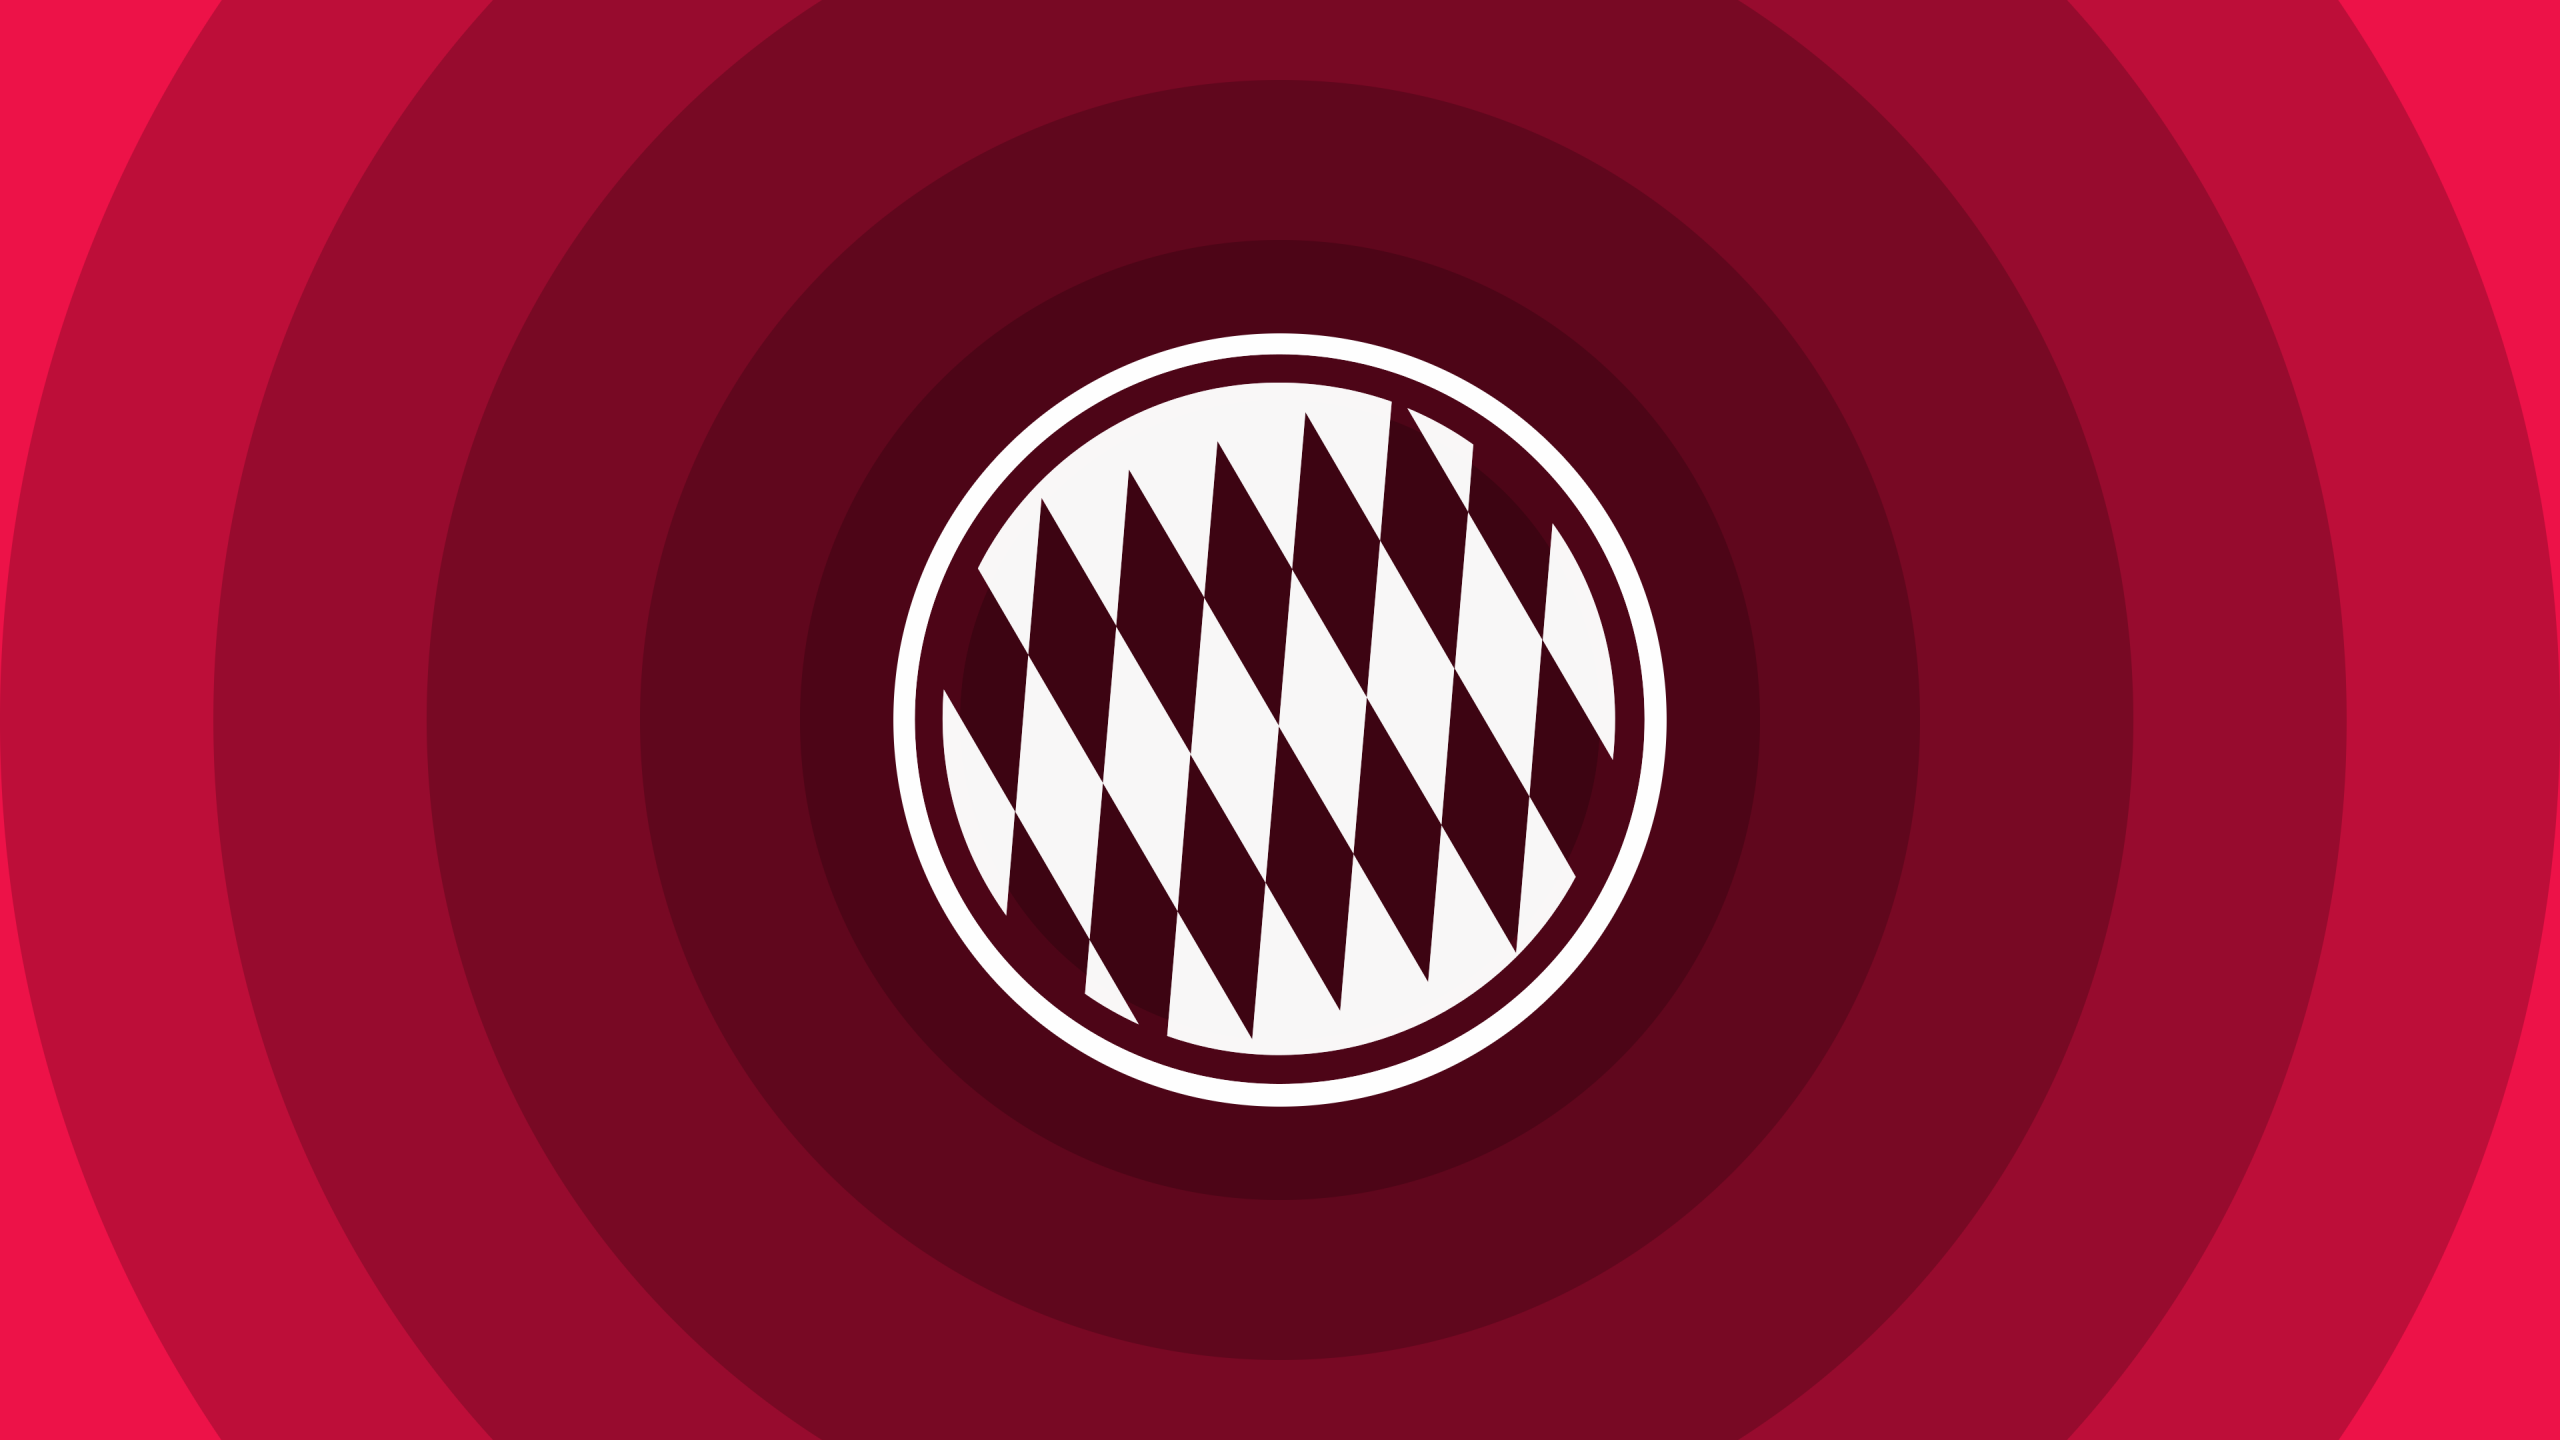 FC Bayern Munich Minimal Logo for 2560x1440 HDTV resolution